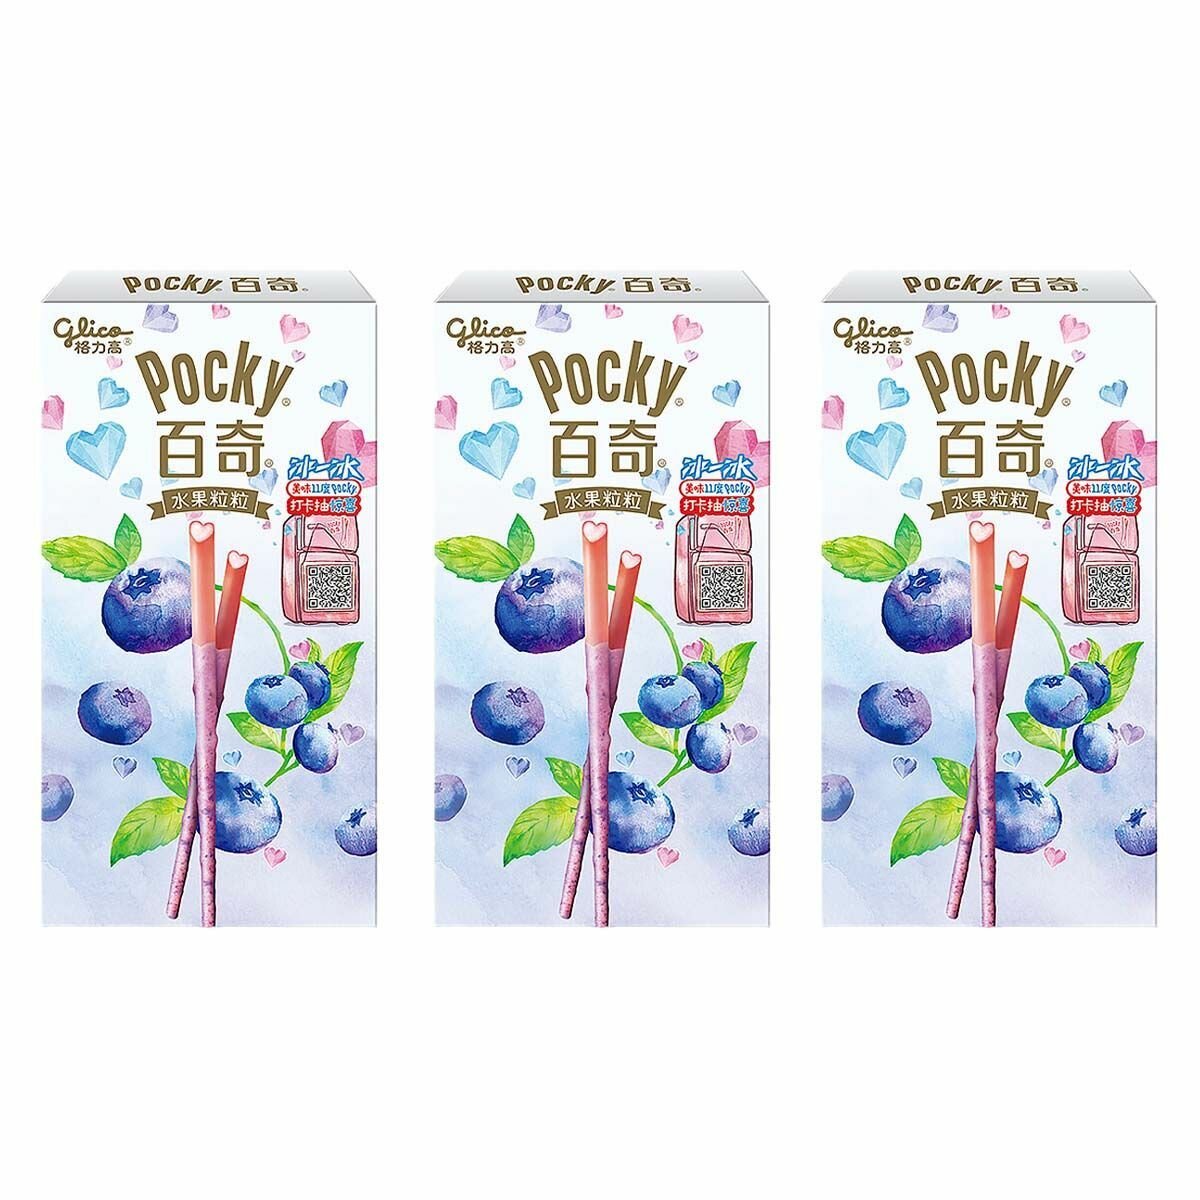 Бисквитные палочки Glico Pocky со вкусом мороженого и черники (Китай), 45 г (3 шт)